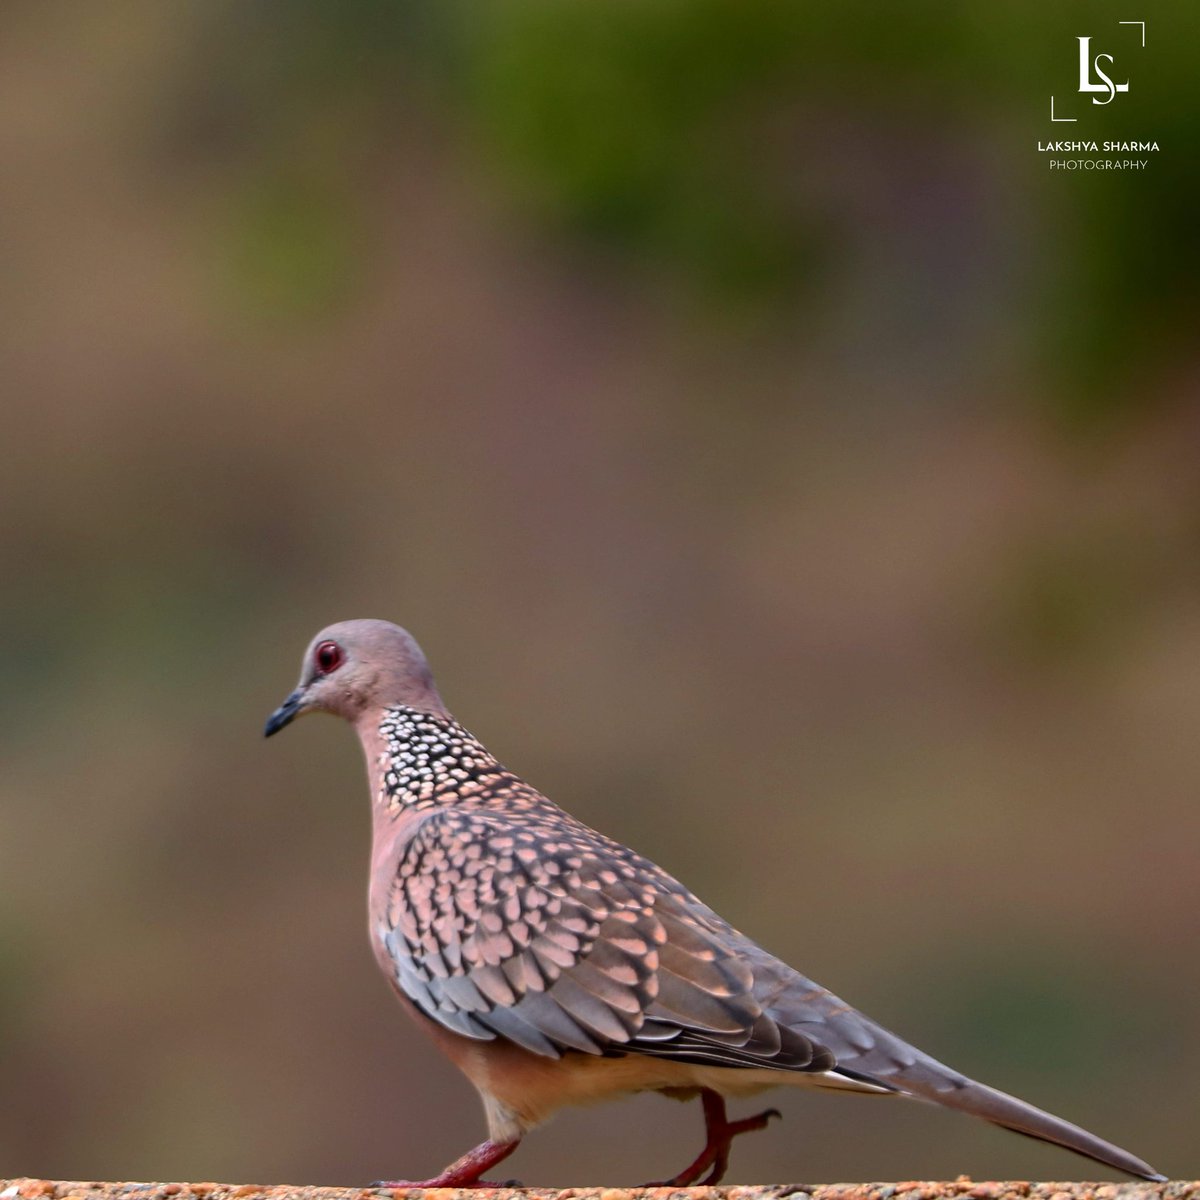 Spotted Dove!!! 
@Canon_India #capturedoncanon #canon #indiaphoto #PhotoOfTheDay #photo #photographer #photography #birds #birdphotography #birdwatching @BirderWorcs @birdsofindia @BirdWatchingMag @BirdwatchExtra @NatGeoIndia